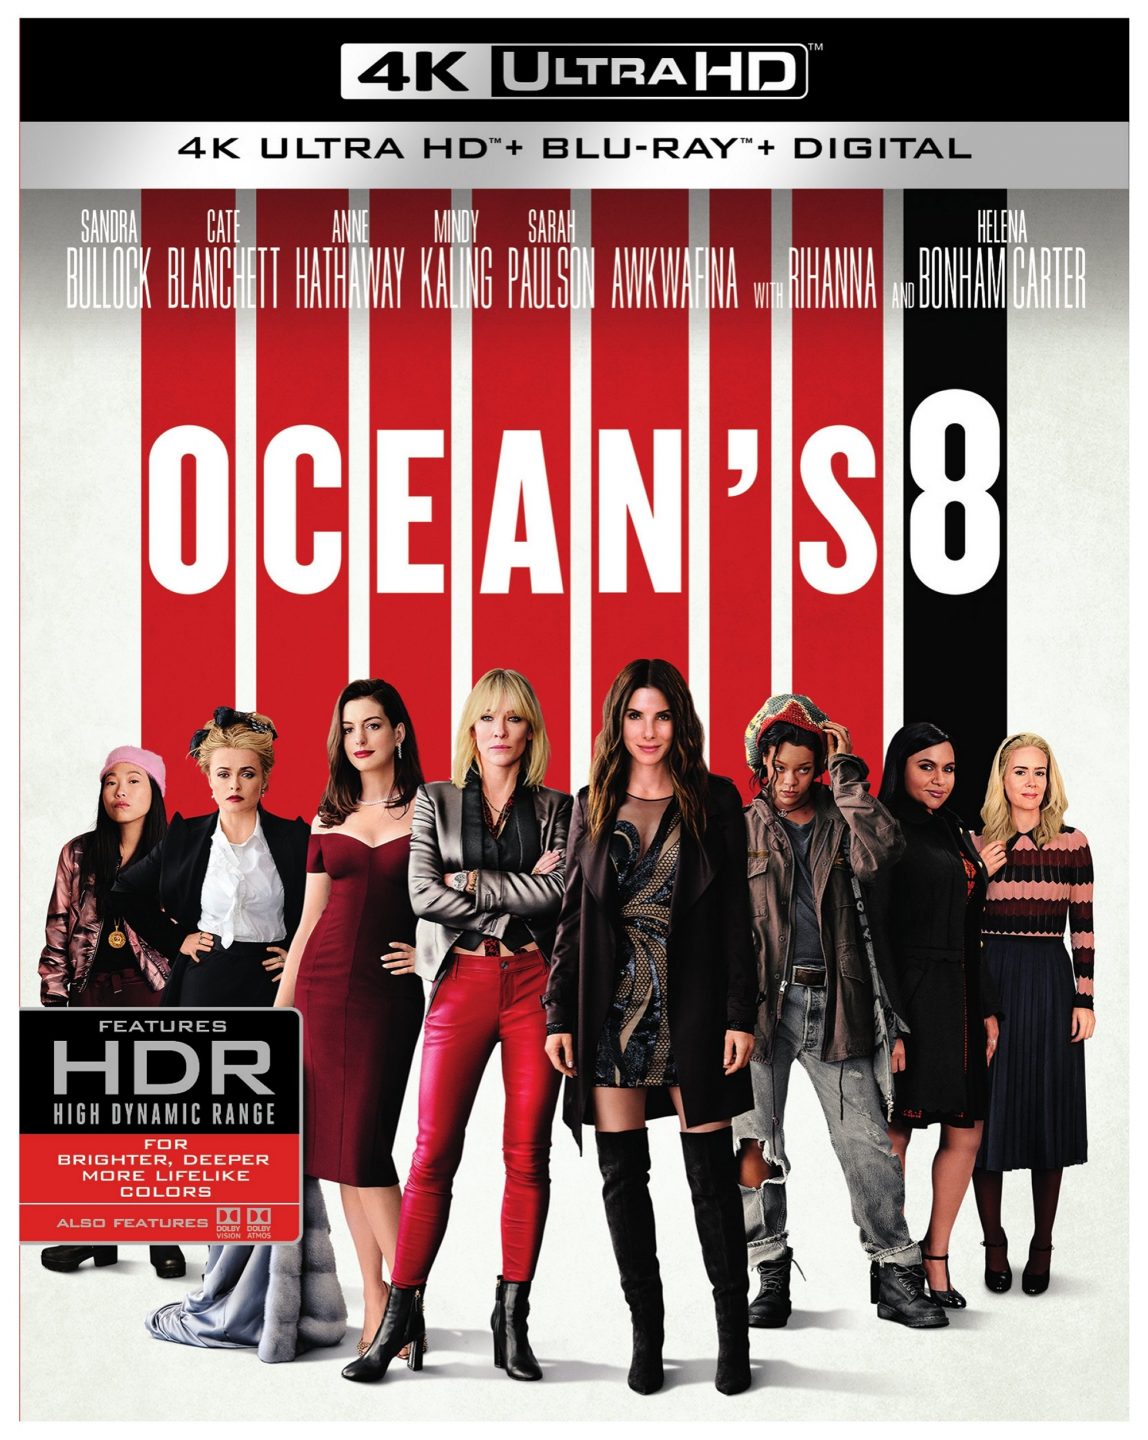 Ocean's 8 4K Ultra HD cover (Warner Bros. Home Entertainment)